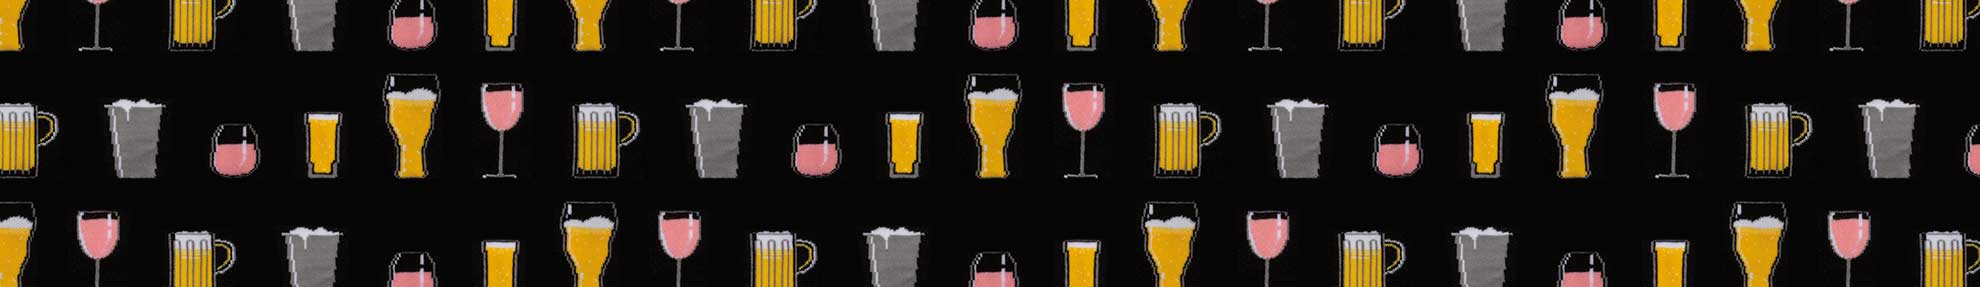 alcohol-header-primitives-by-kathy.jpg